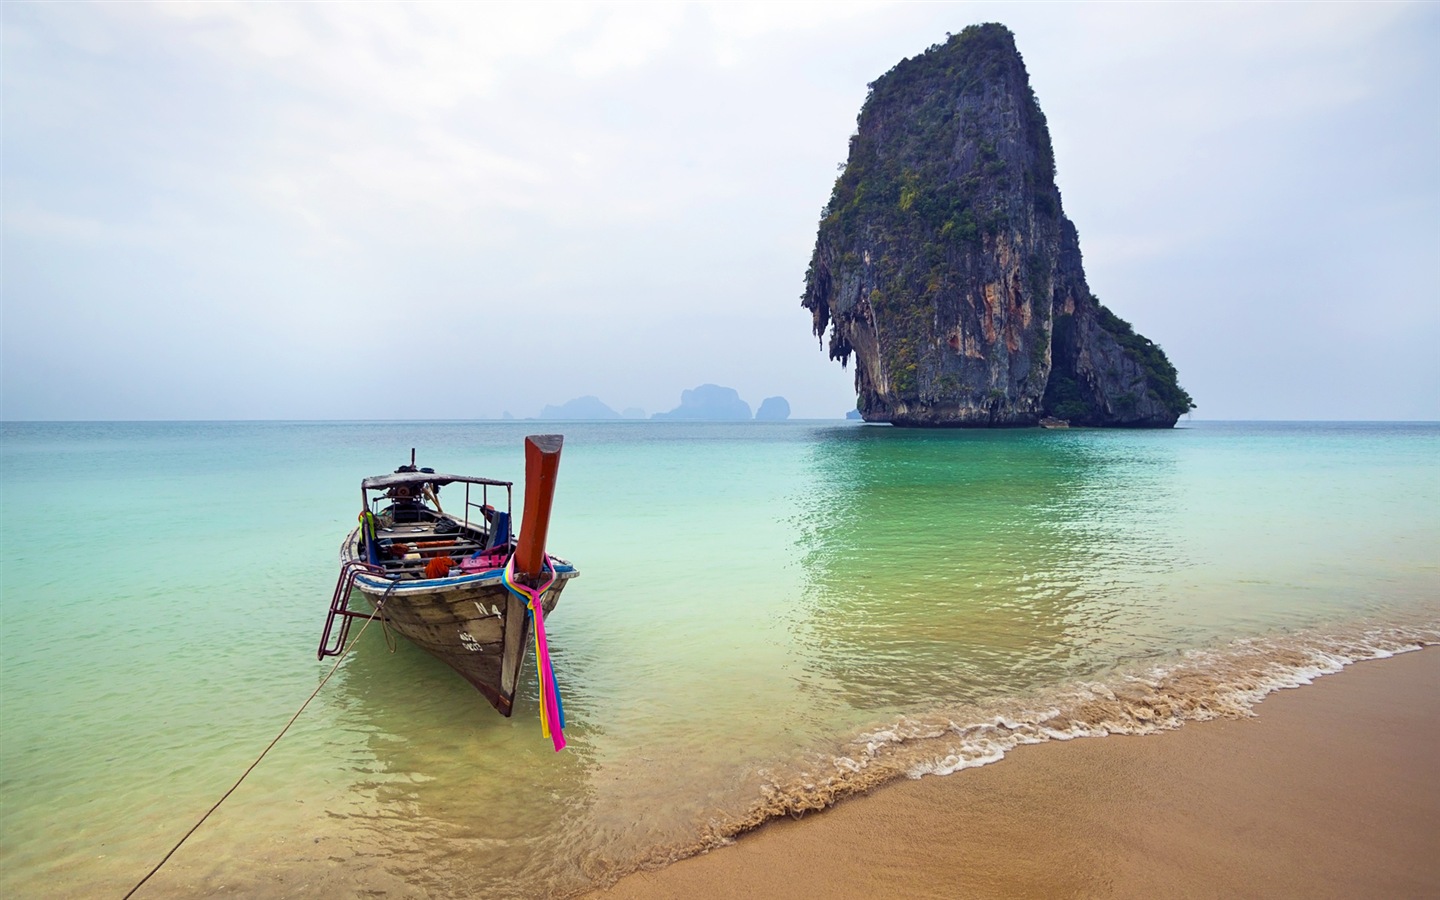 Windows 8 theme wallpaper: beautiful scenery in Thailand #3 - 1440x900